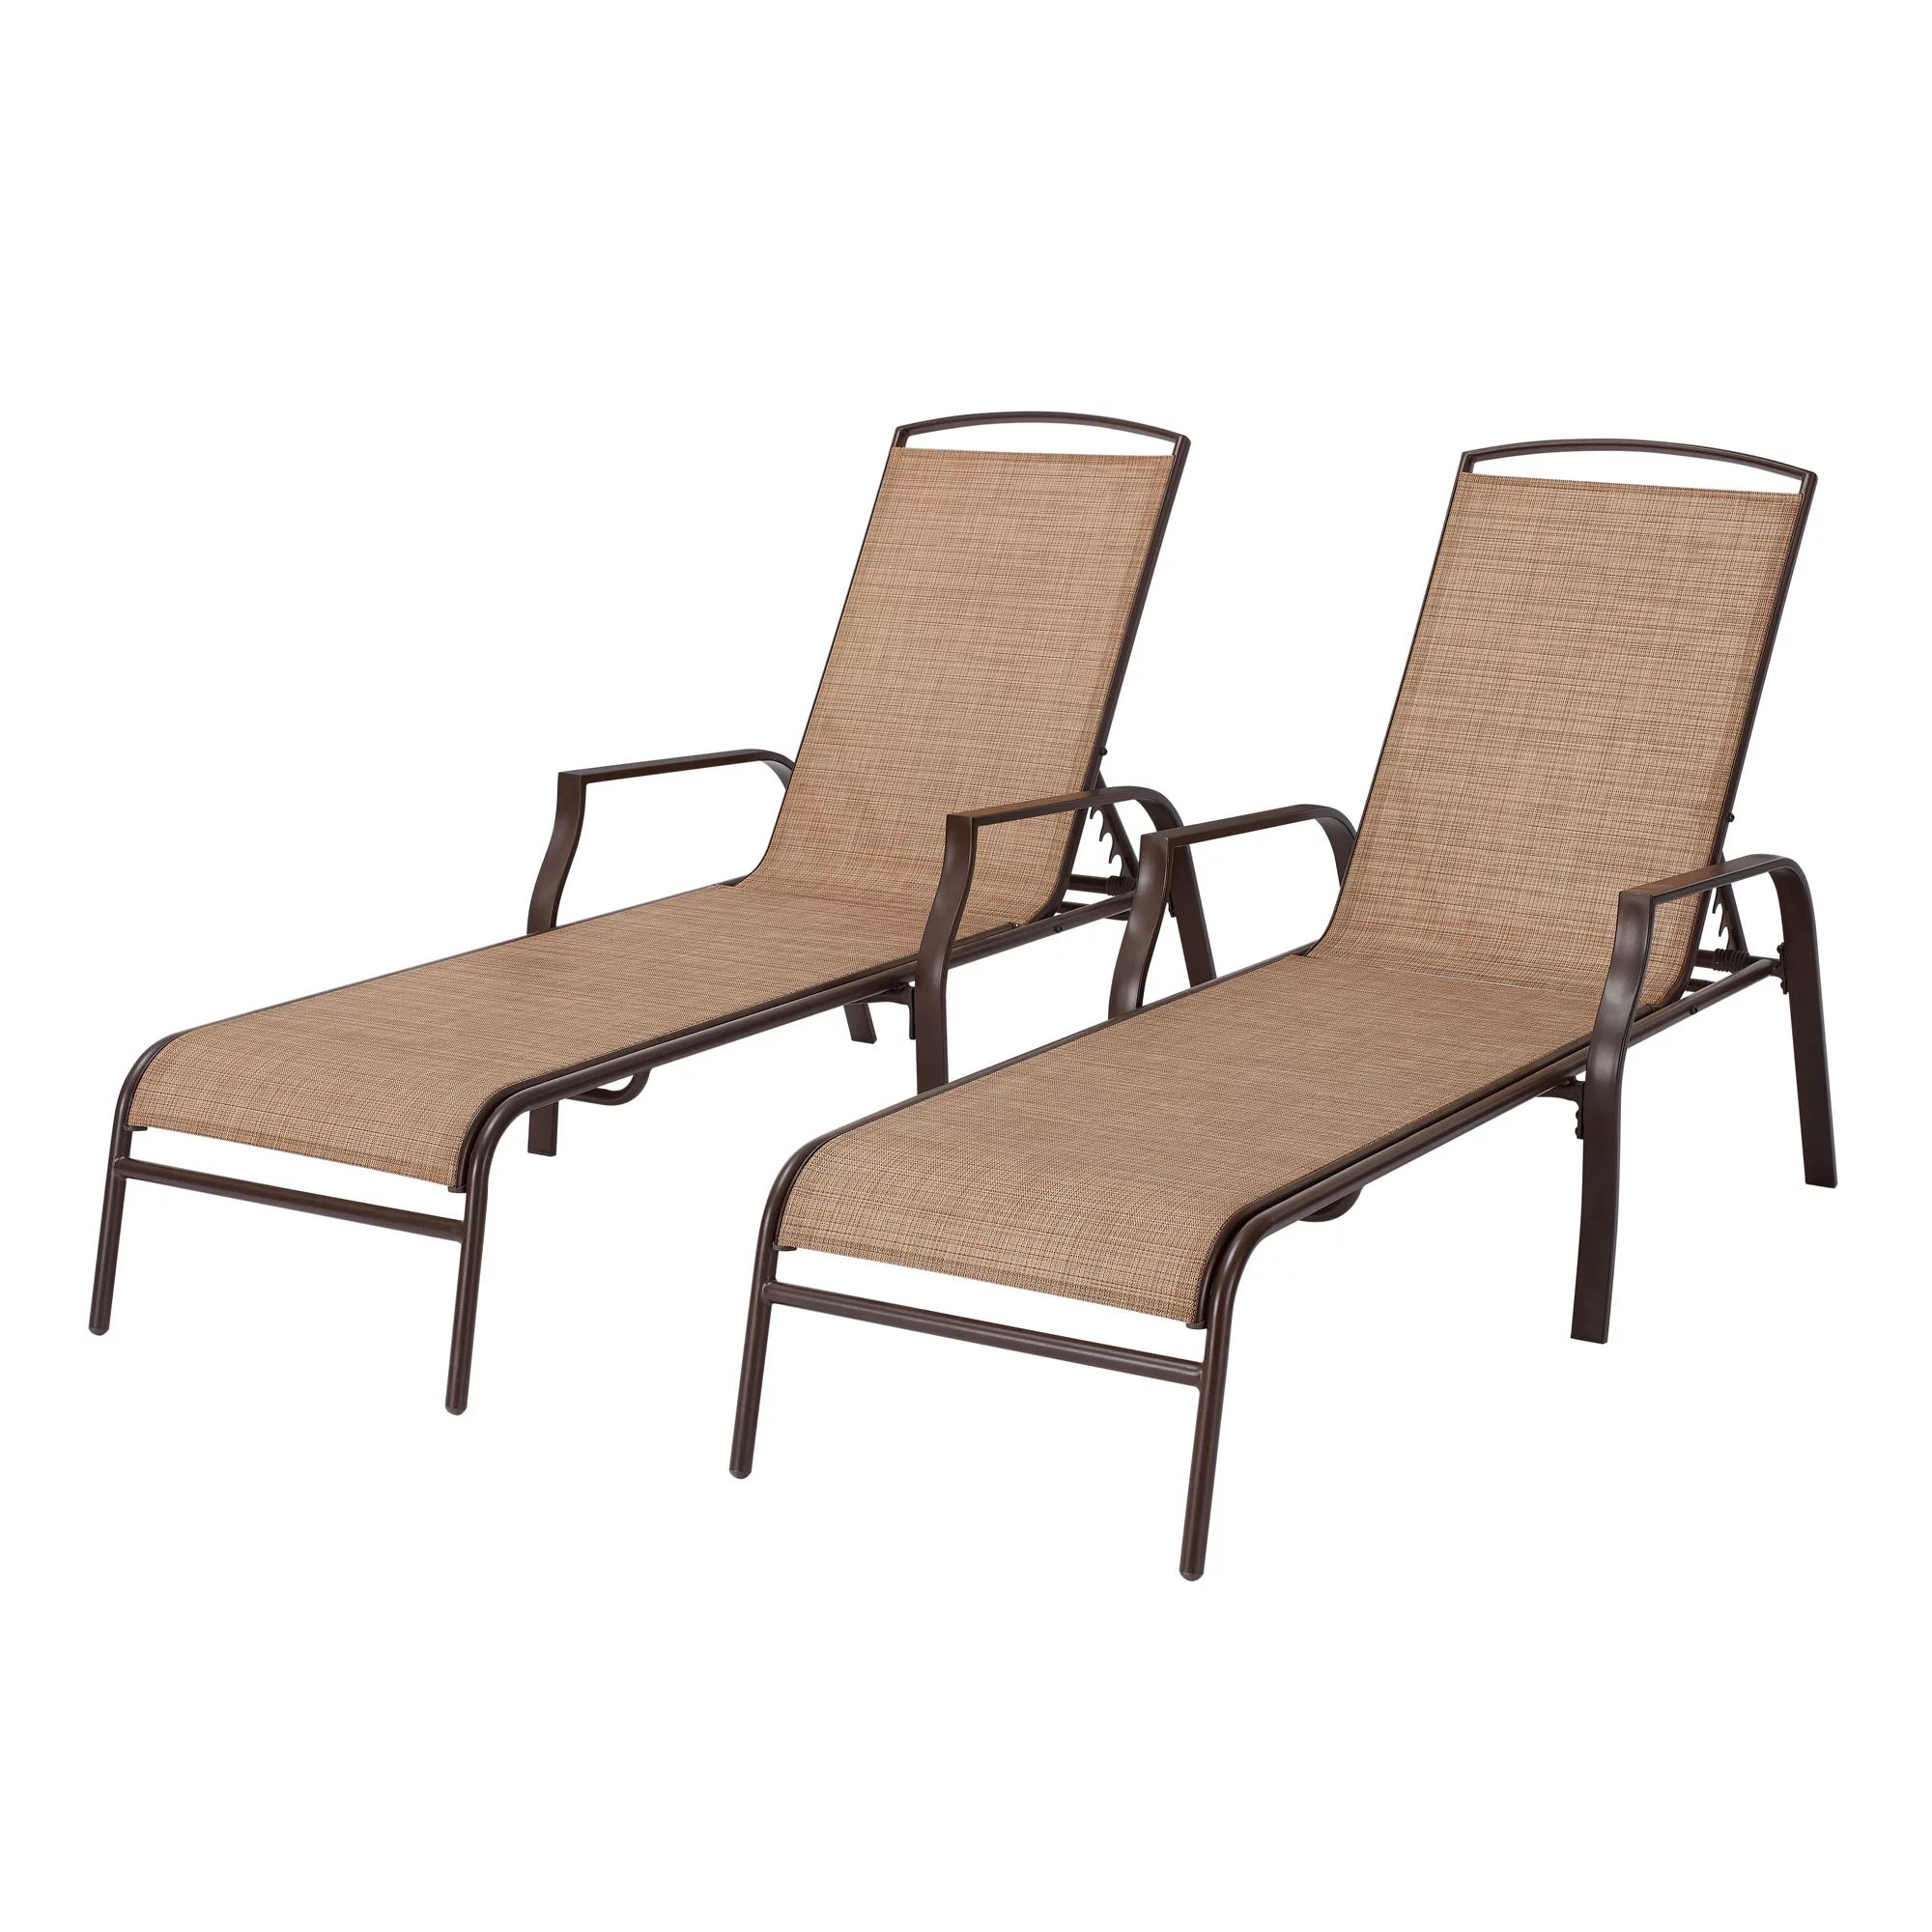 Mainstays Sand Dune Reclining Steel Outdoor Chaise Lounge - Set of 2, Beige/Black | Walmart (US)